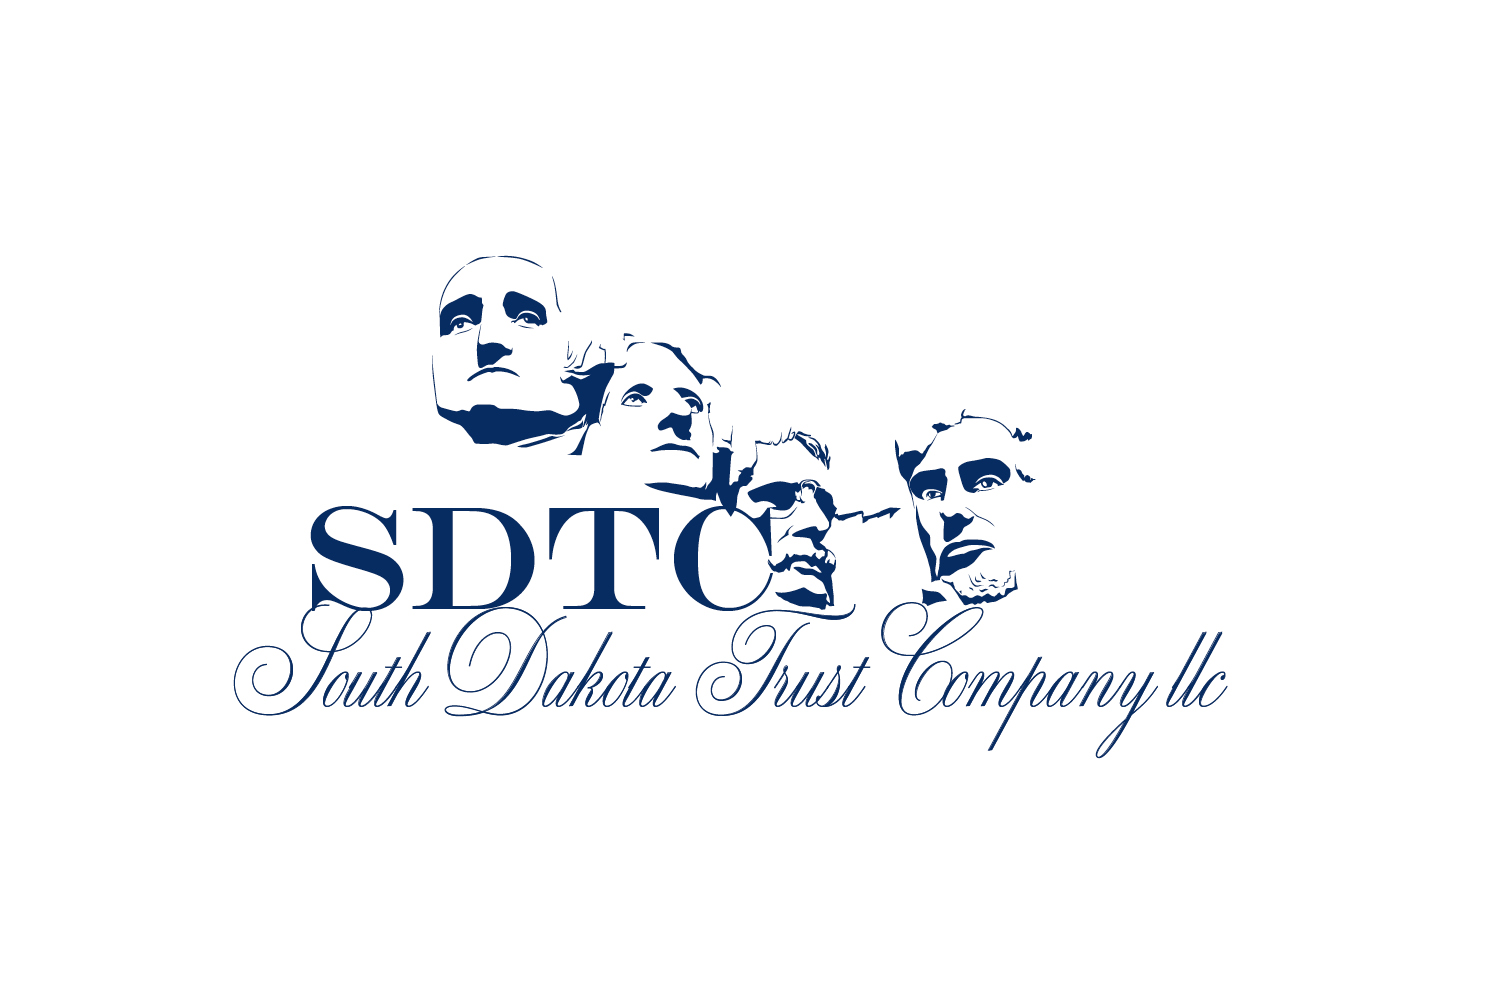 South Dakota Trust Company LLC